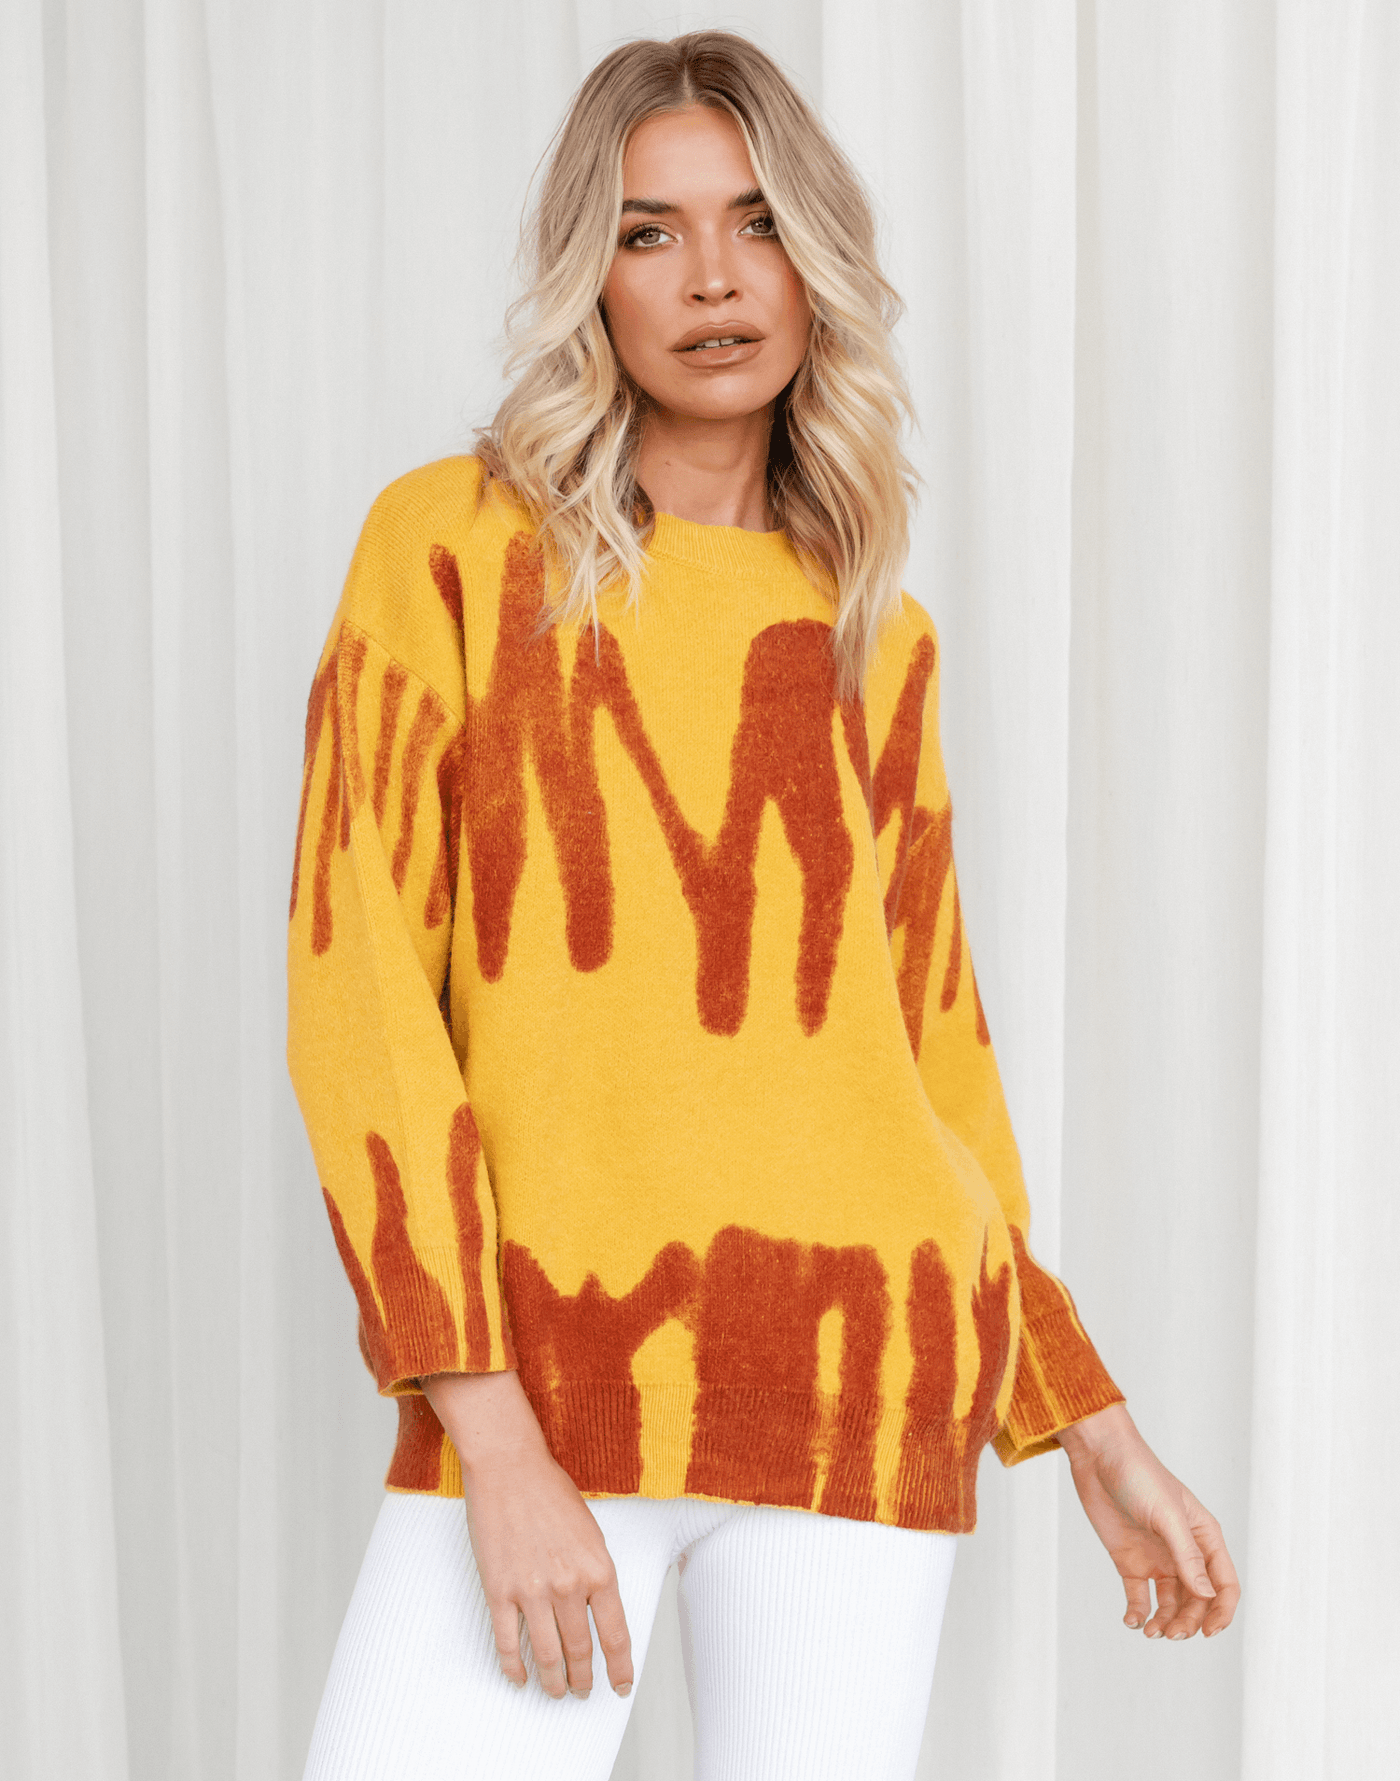 Ashtyn Knit Jumper (Mustard) - Mustard and Orange Knit Jumper - Women's Top - Charcoal Clothing